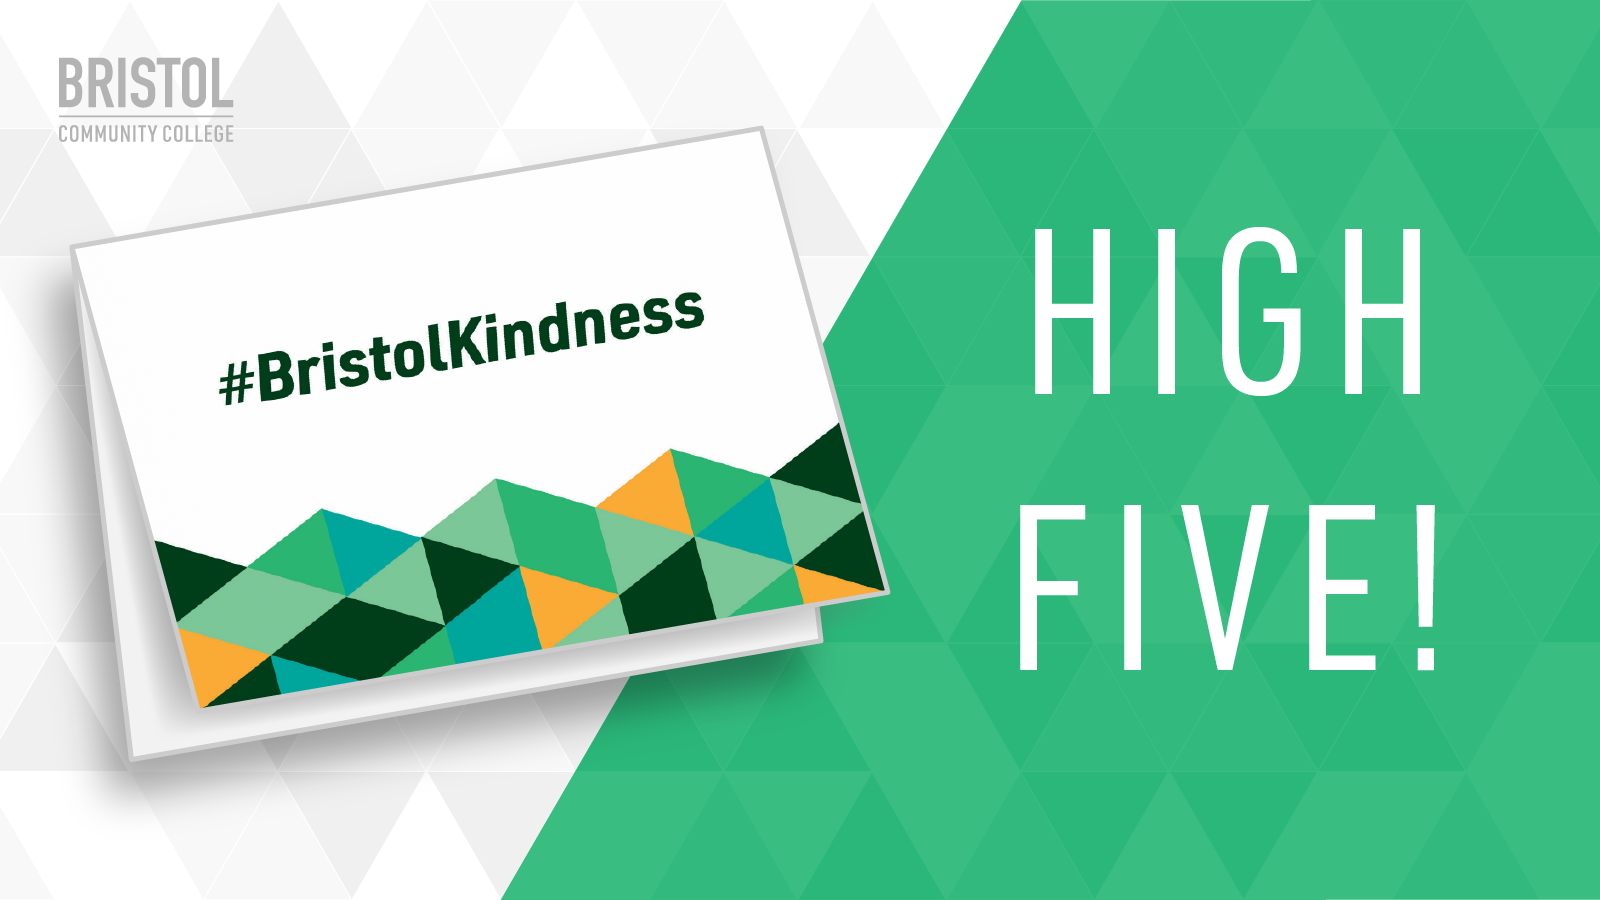 Bristol Kindness - High Five